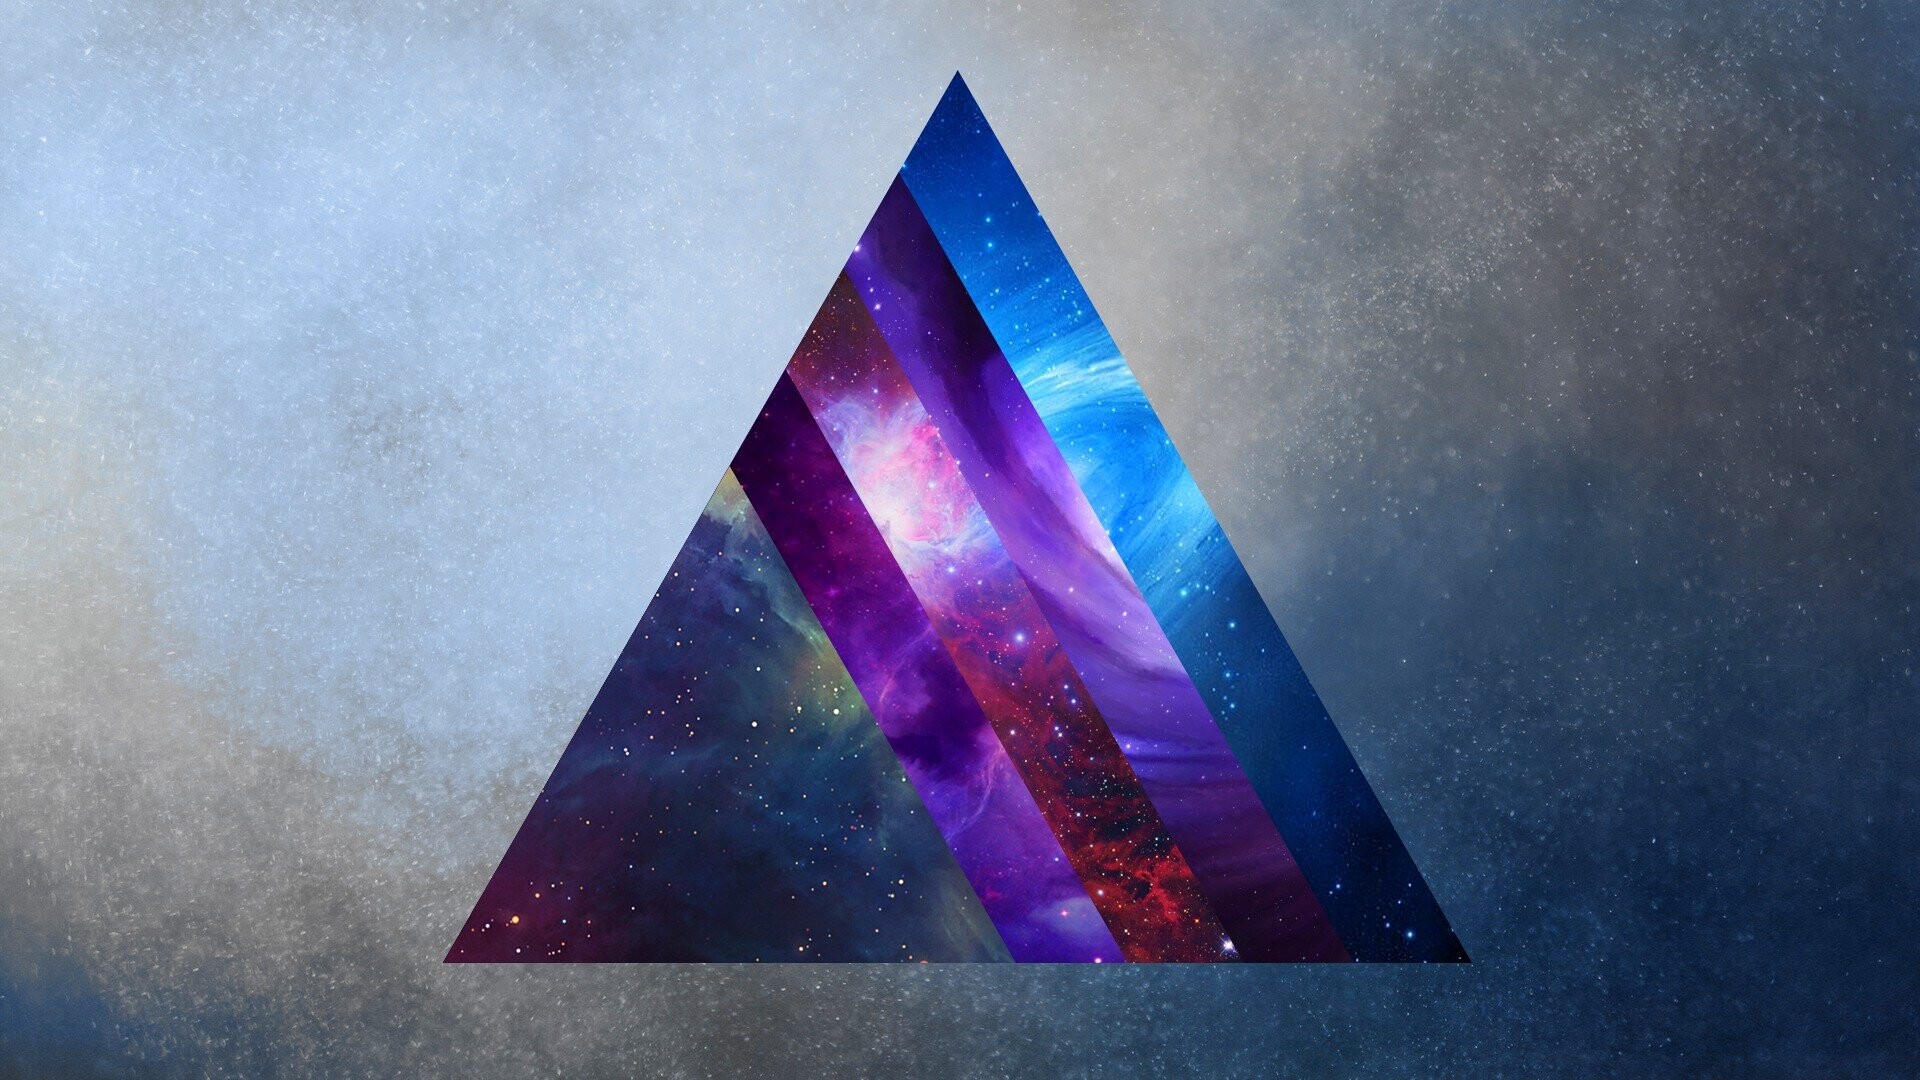 Triangle: Space, Prism, Galaxy, Nebula, Parallel stripes. 1920x1080 Full HD Wallpaper.